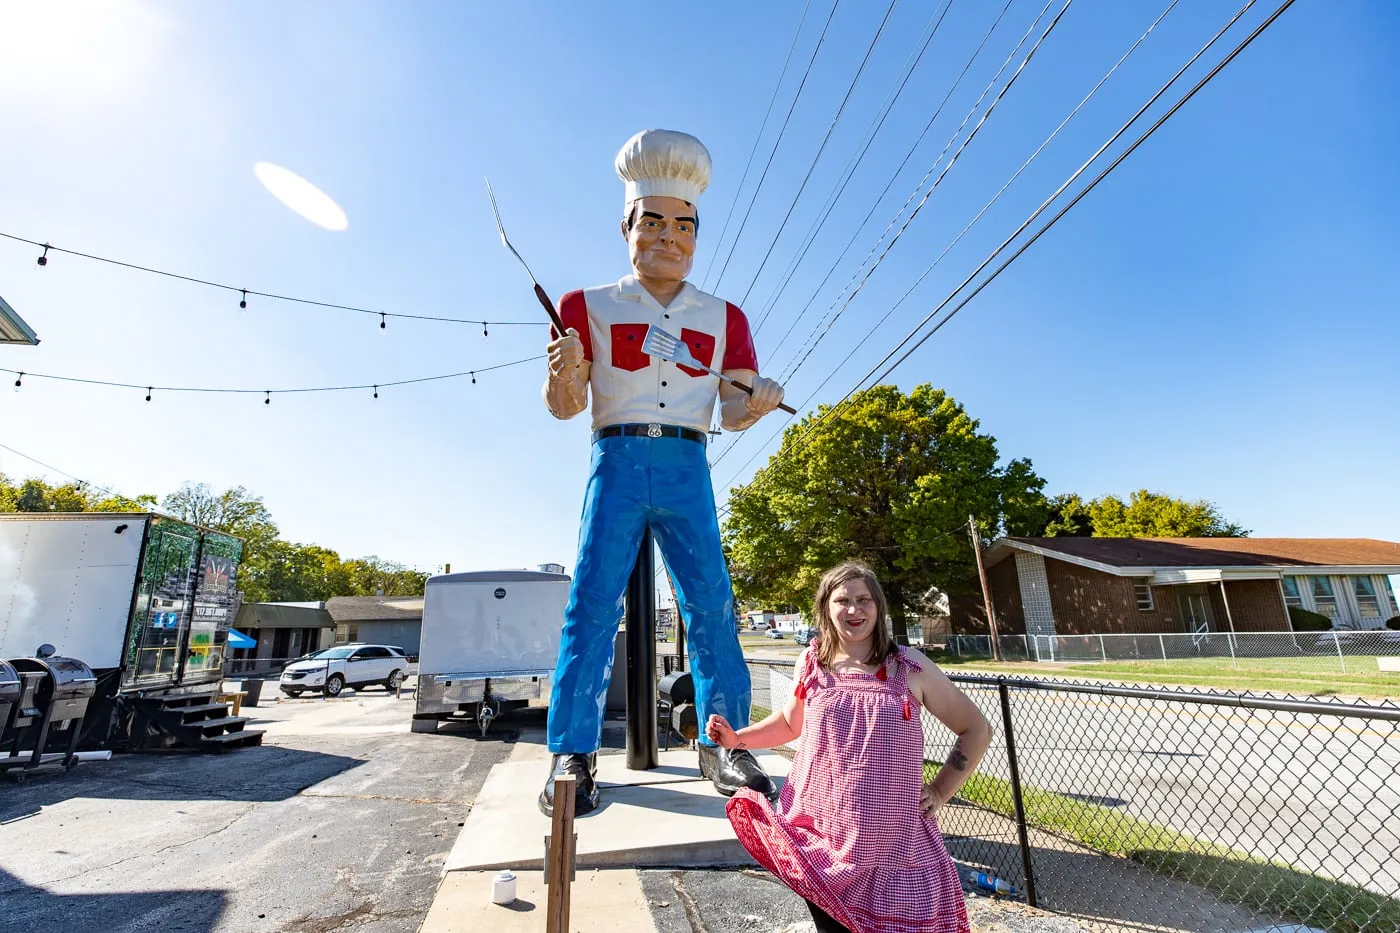 Route 66 Food Truck Park & Chef Muffler Man roadside attraction in Springfield, Missouri